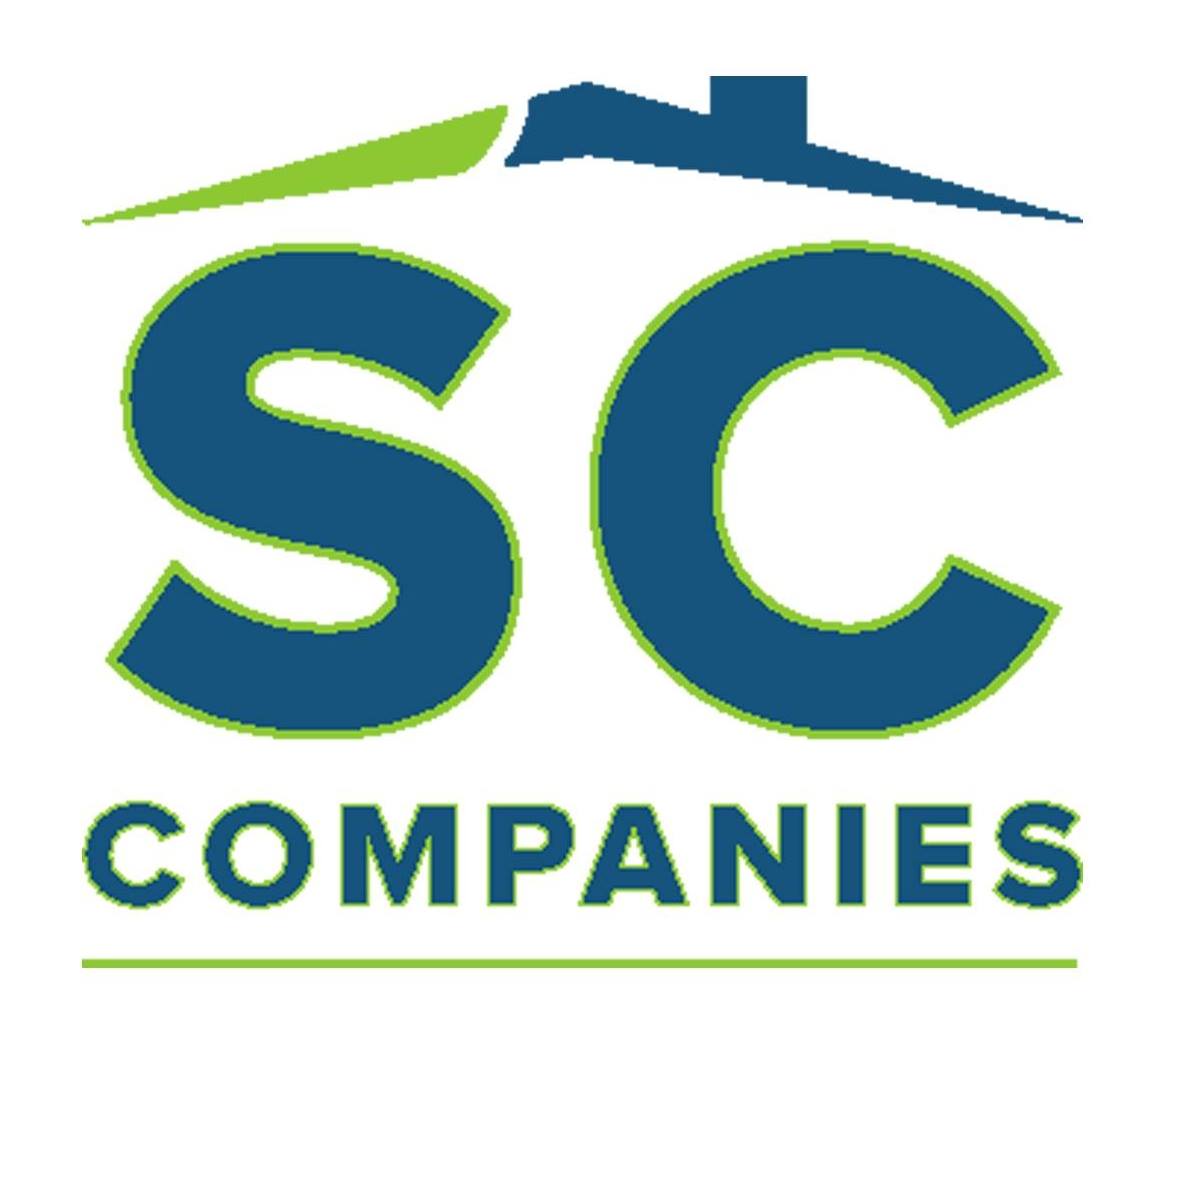 SC Companies